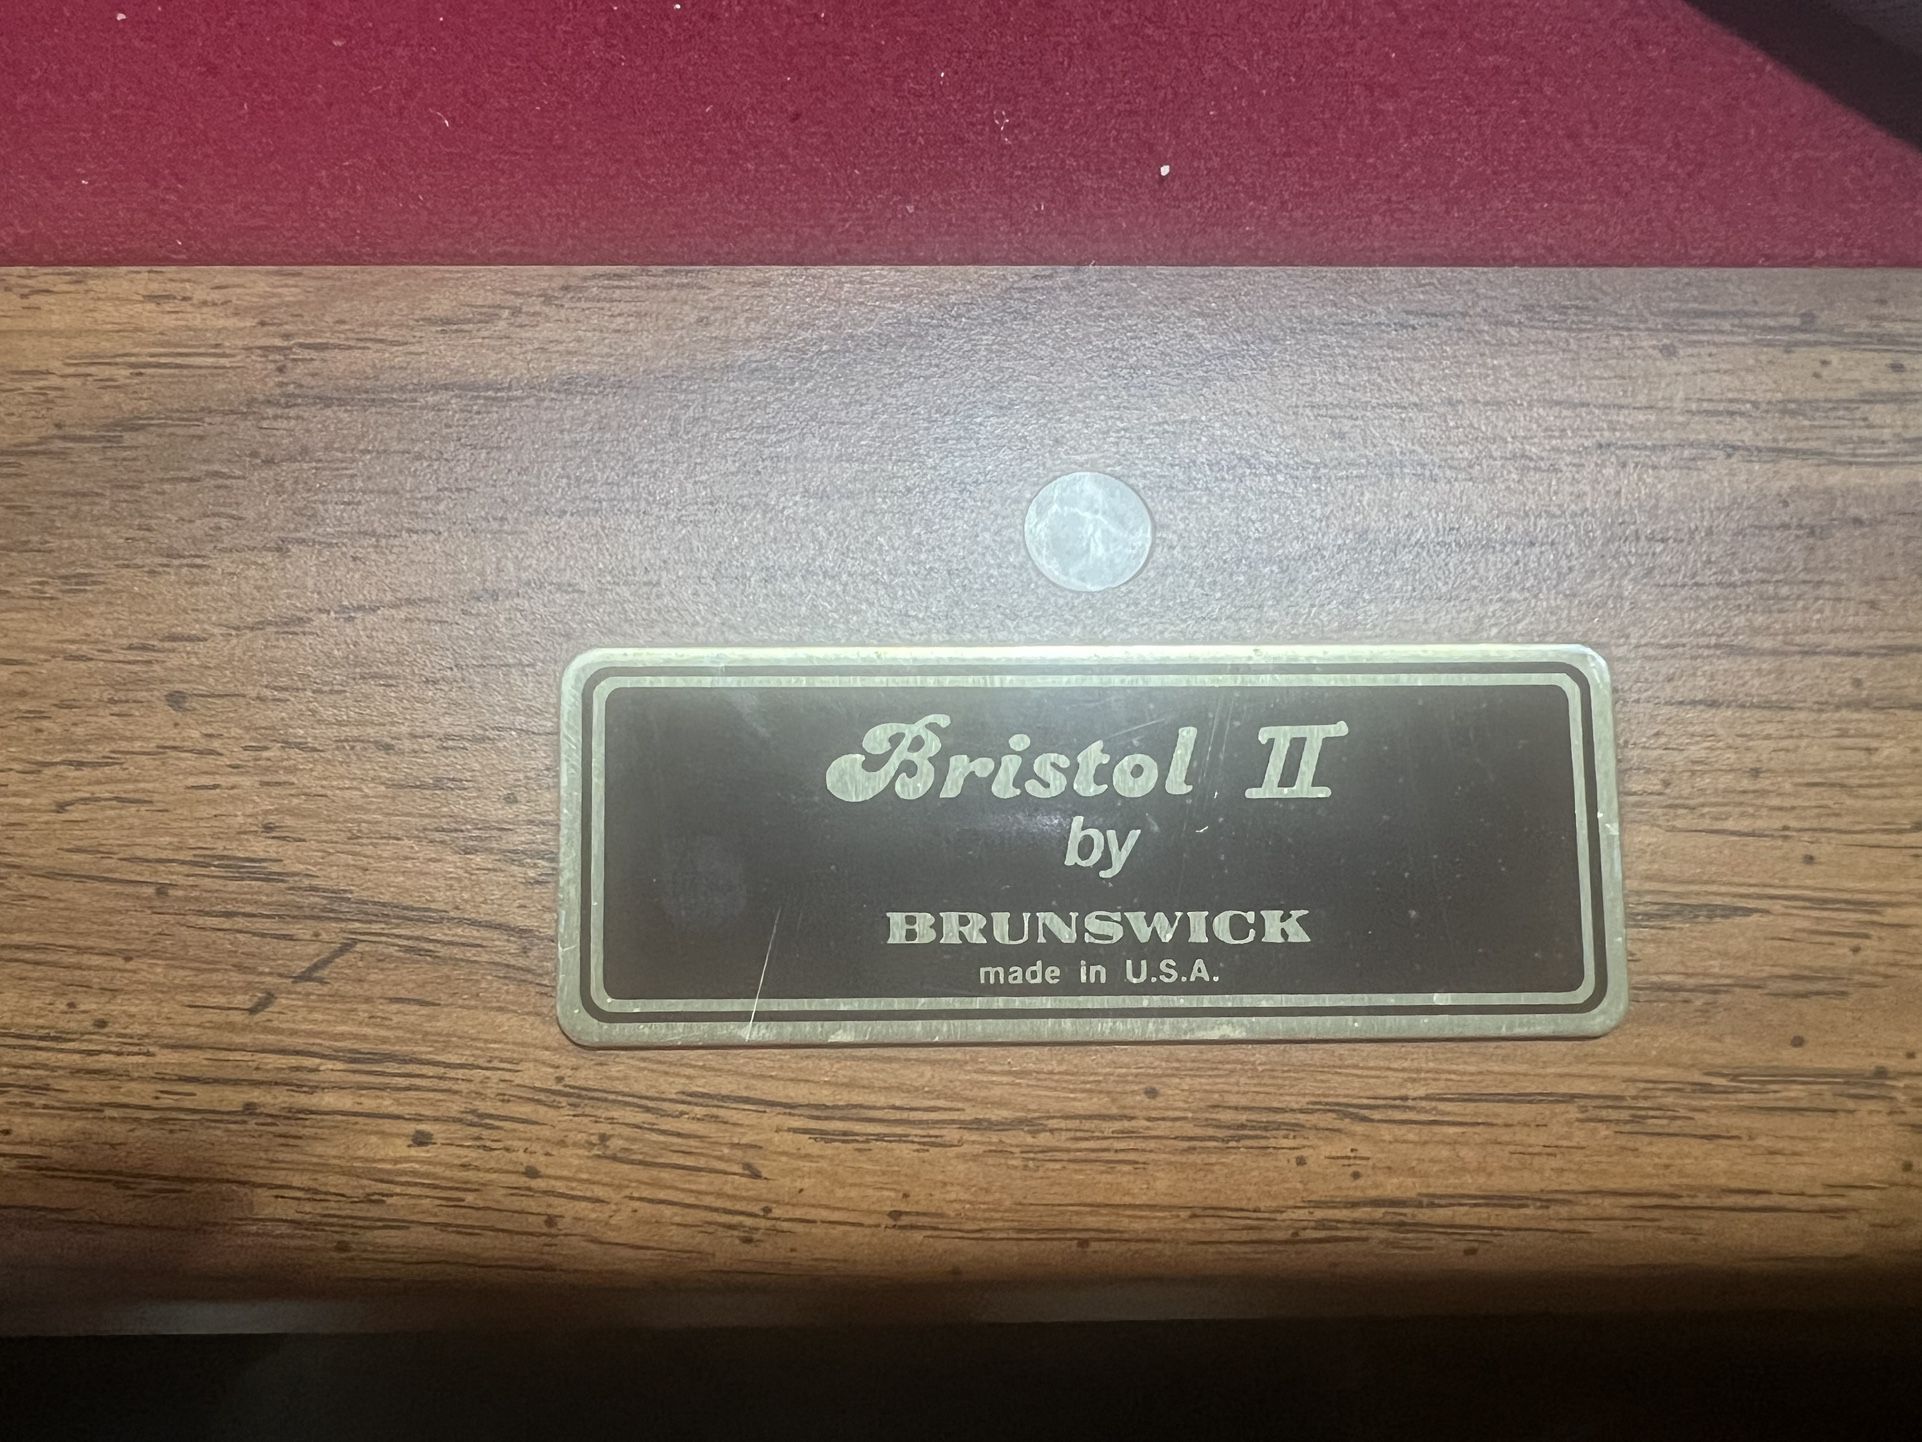 Bristol II Pool Table - 9 Ft By Brunswick 